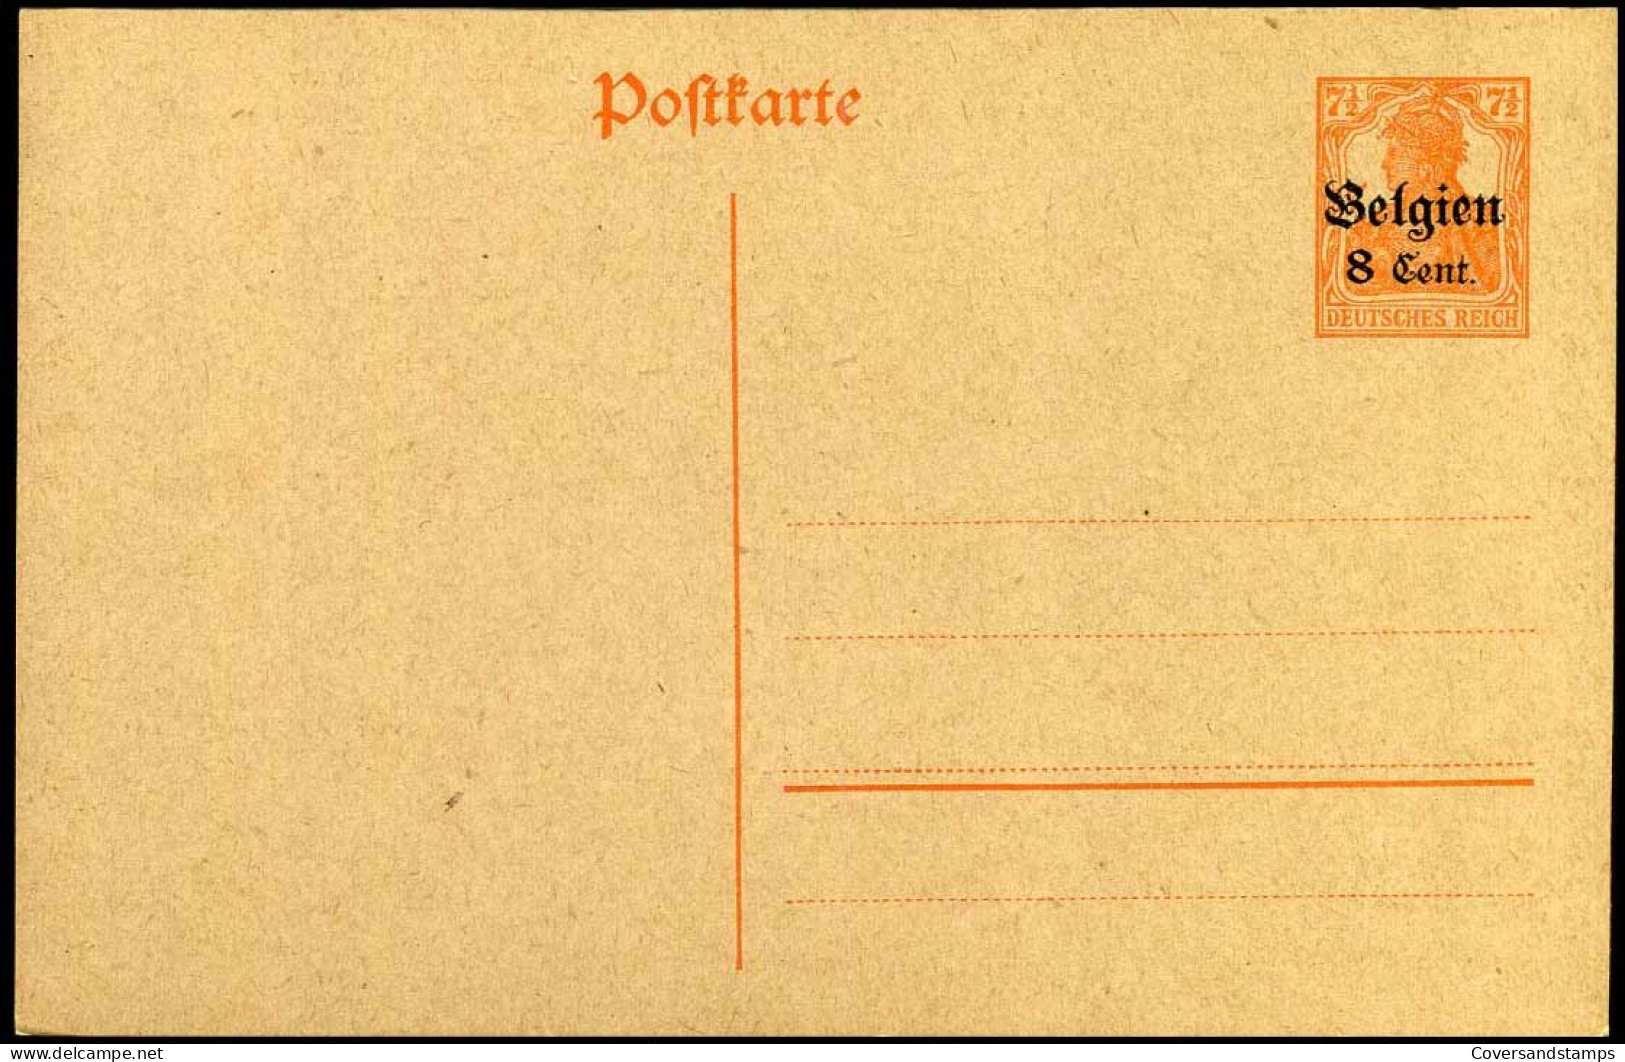 Postkarte - Belgien 8 Cent - Postkarten 1909-1934